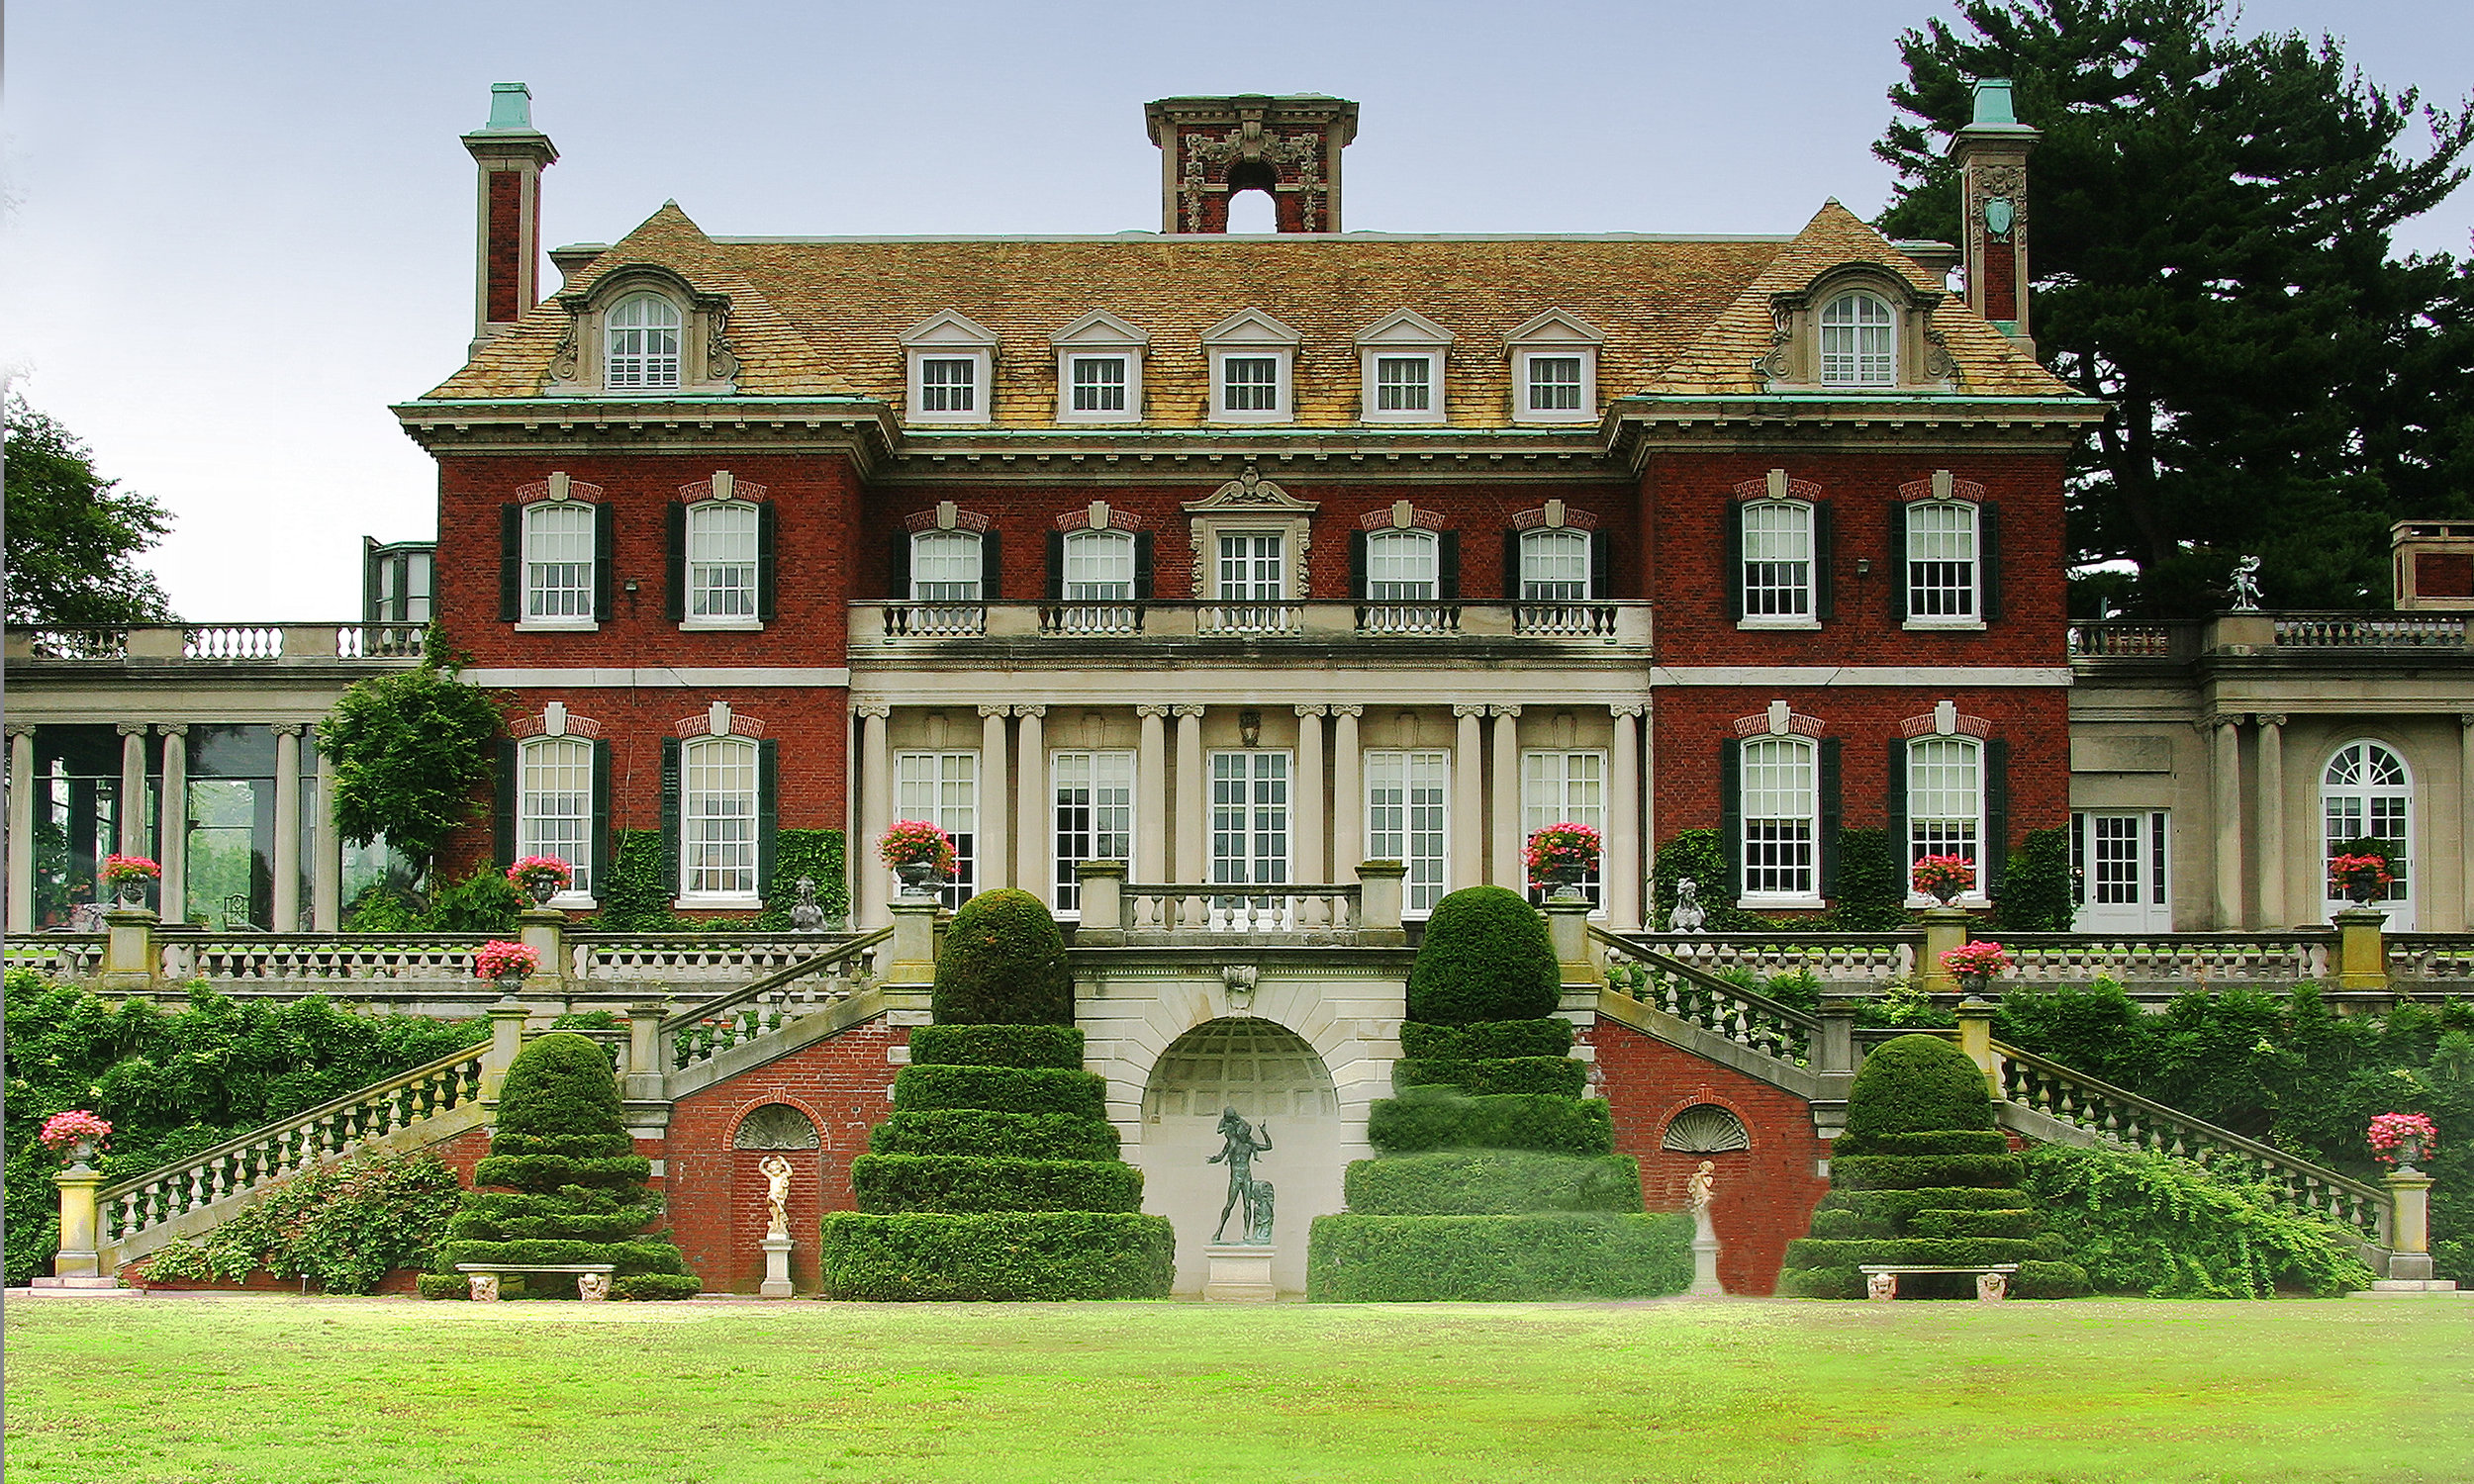 Photo of the Mansion at Old Westbury Gardens, Westbury, NY.